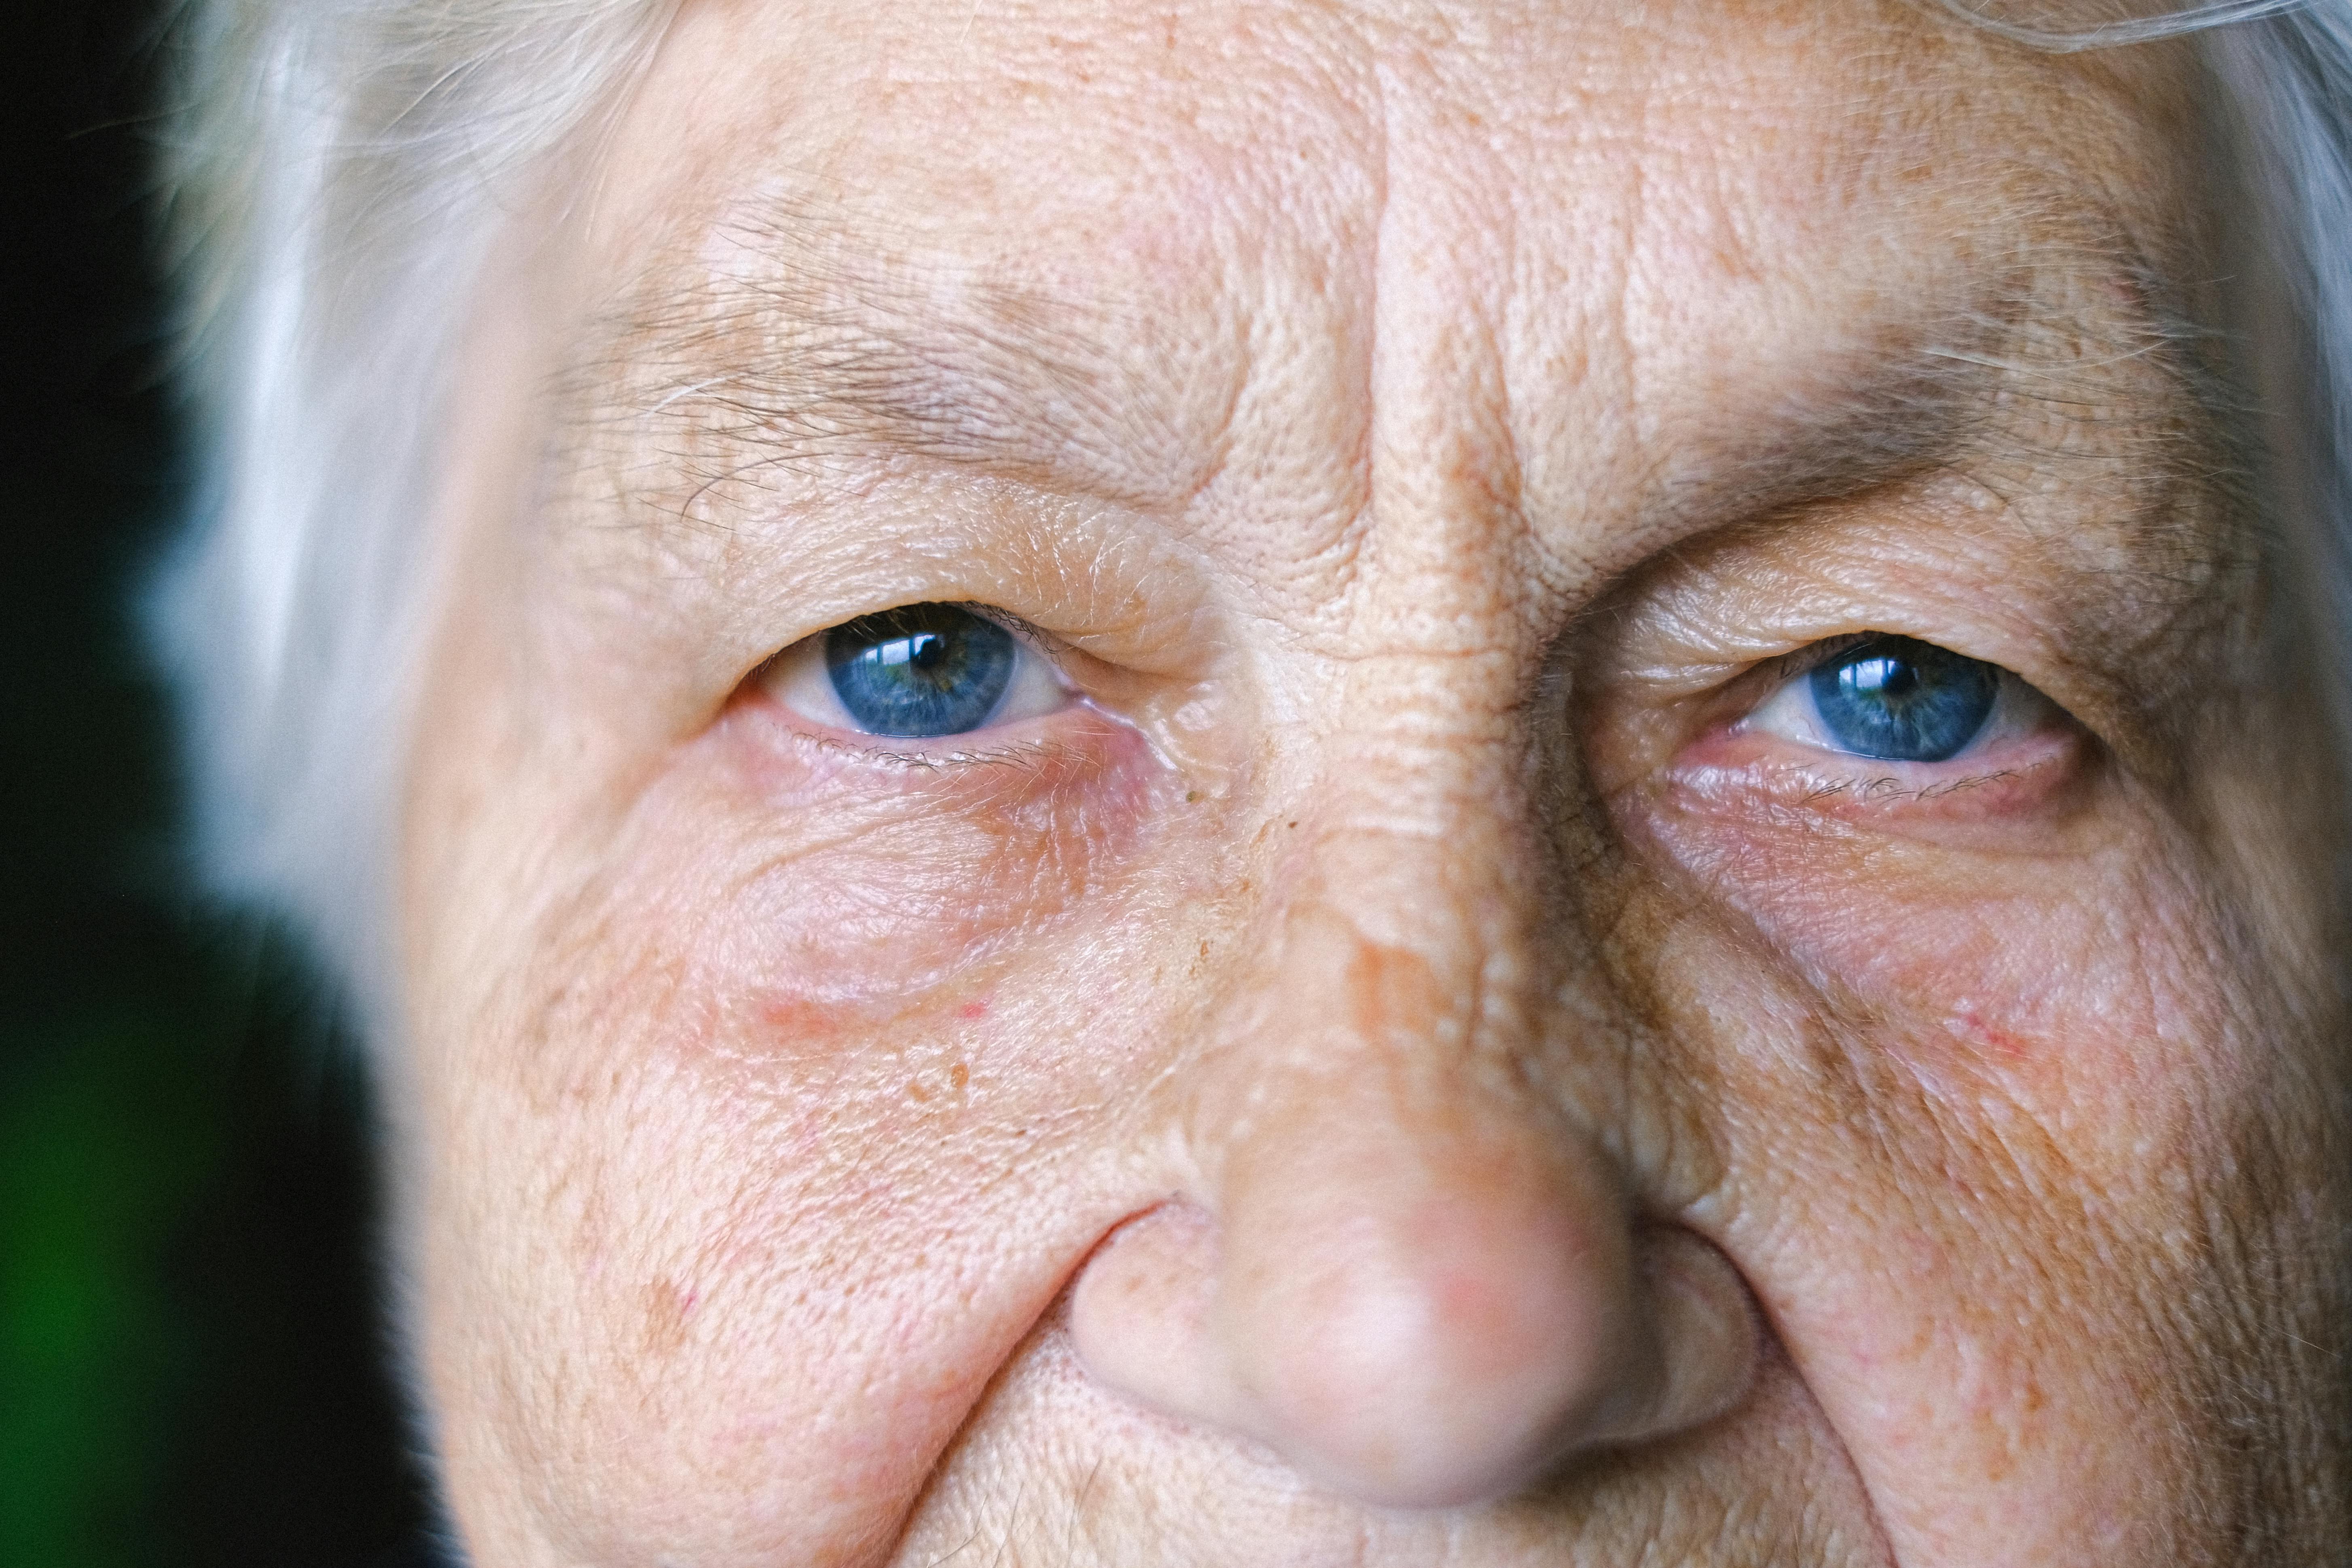 A grandma's strict glare | Source: Pexels